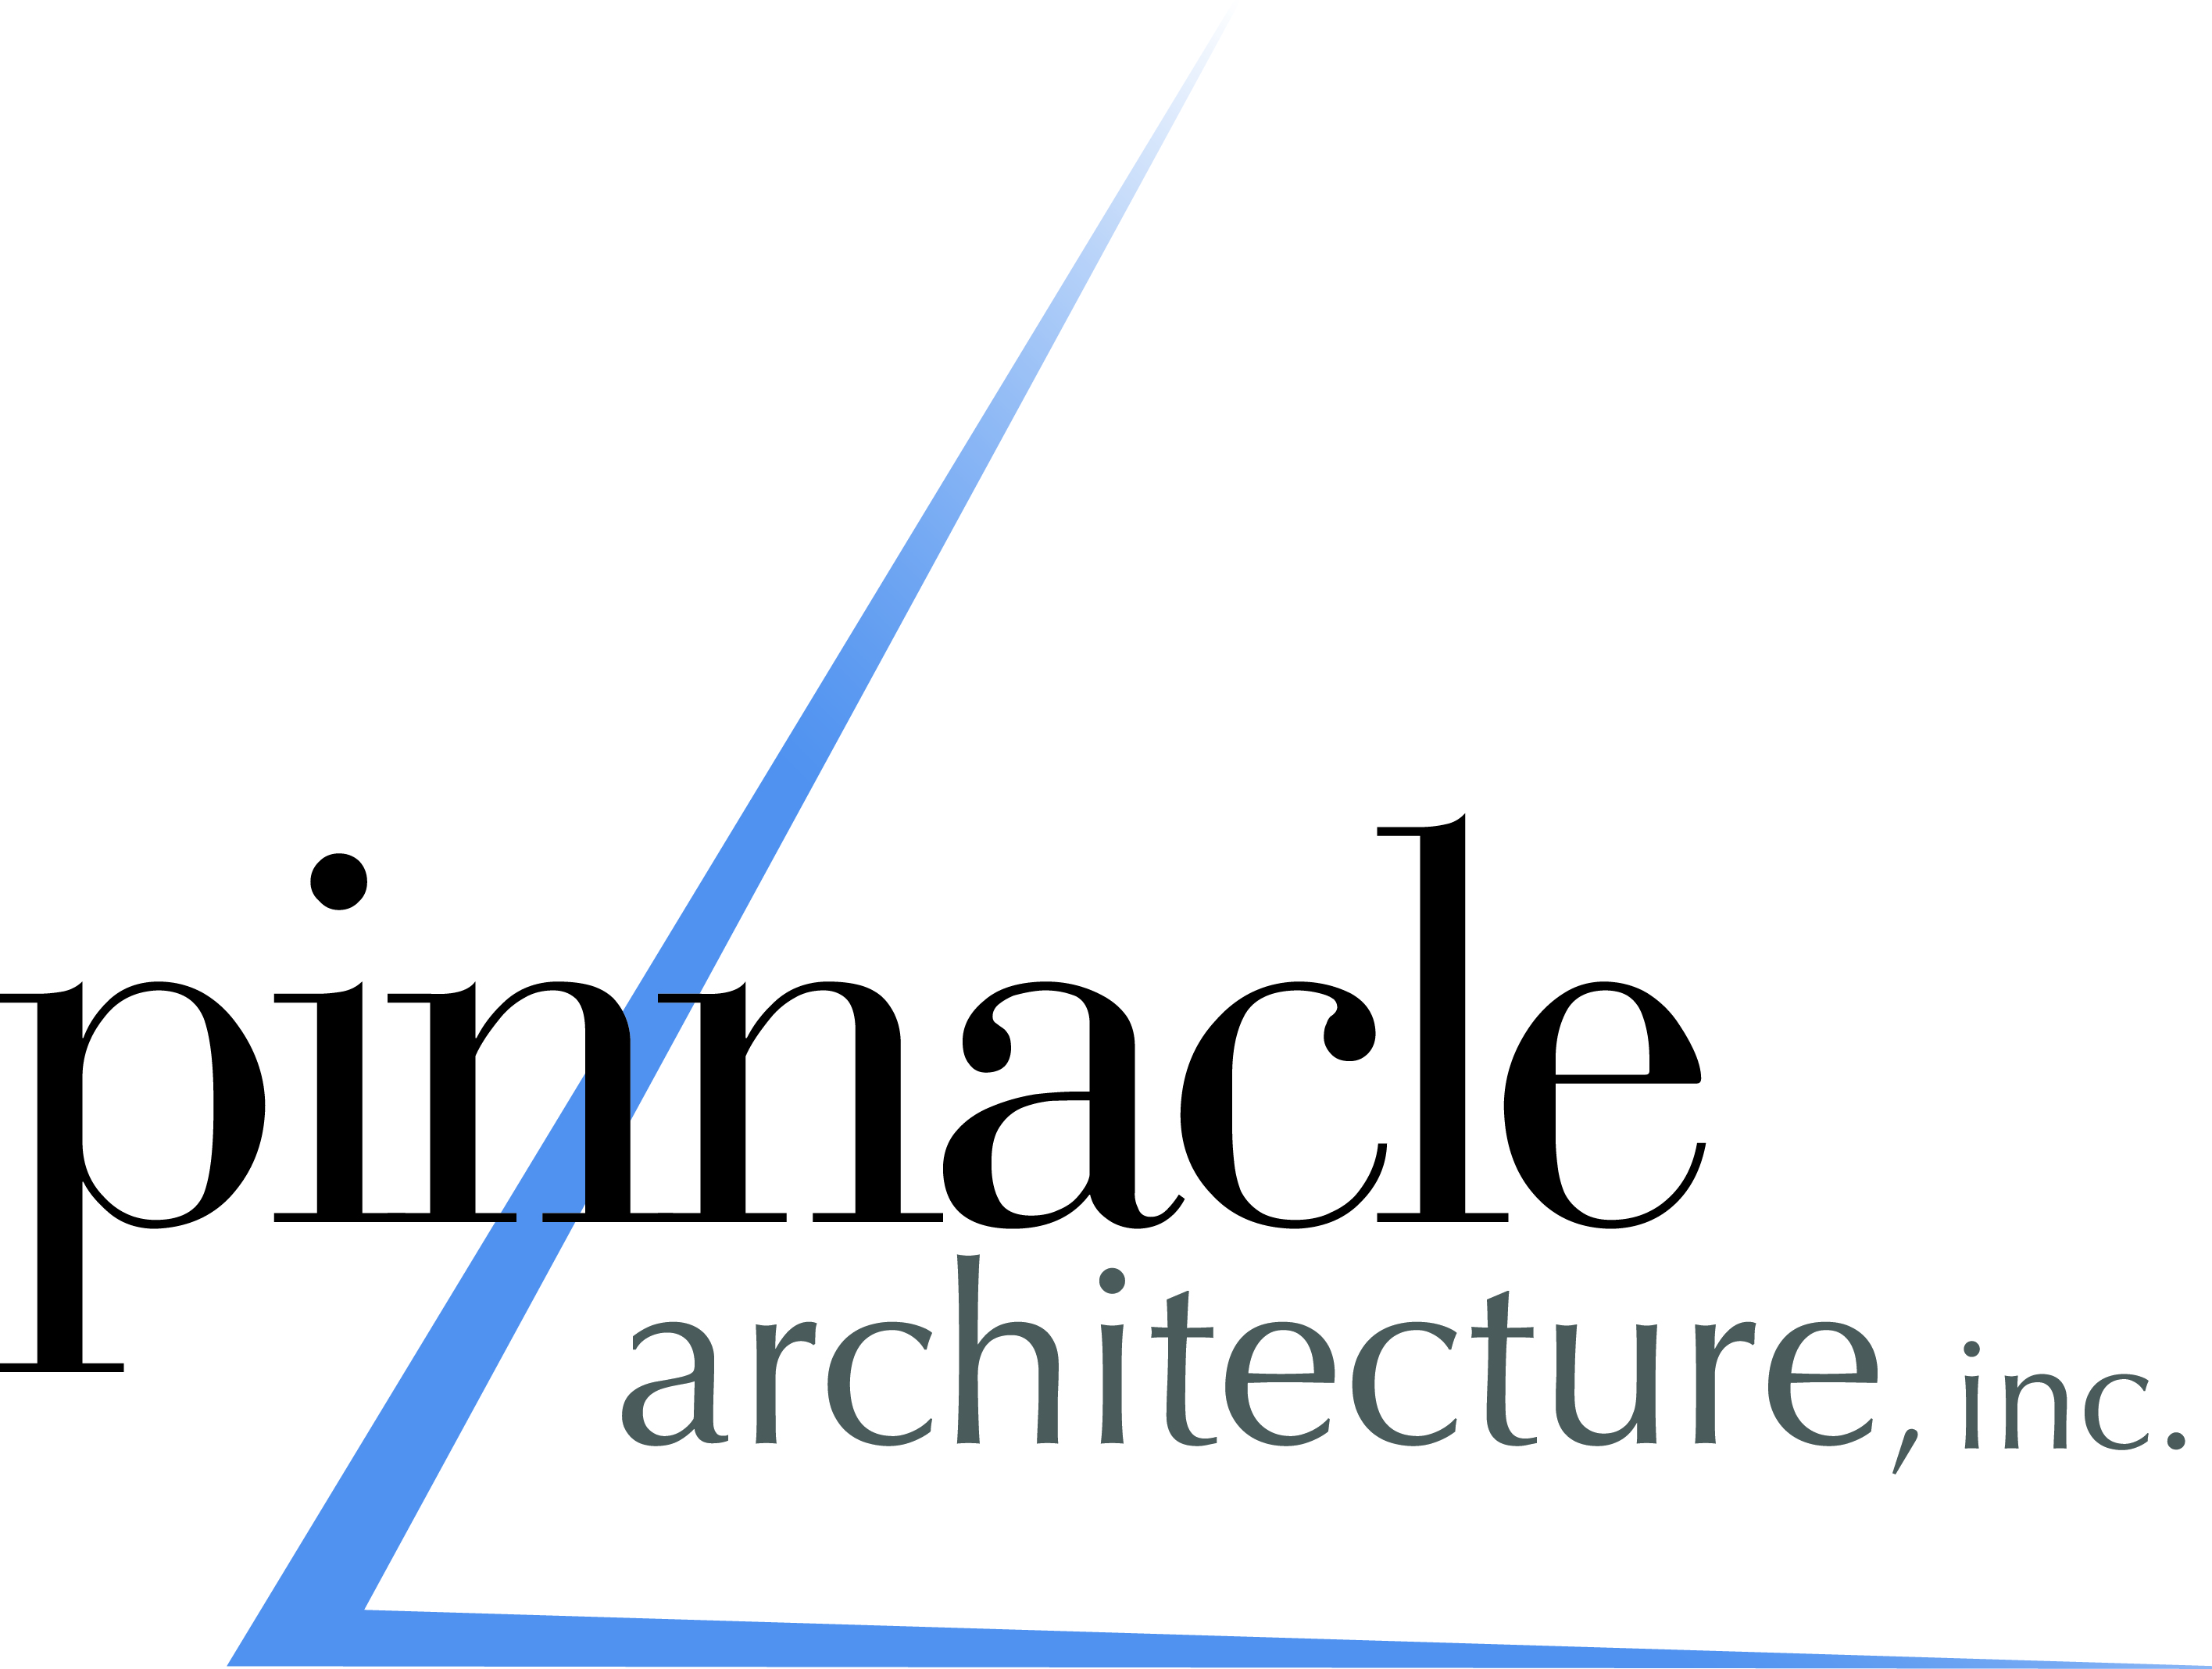 Pinnacle Architecture, Inc.